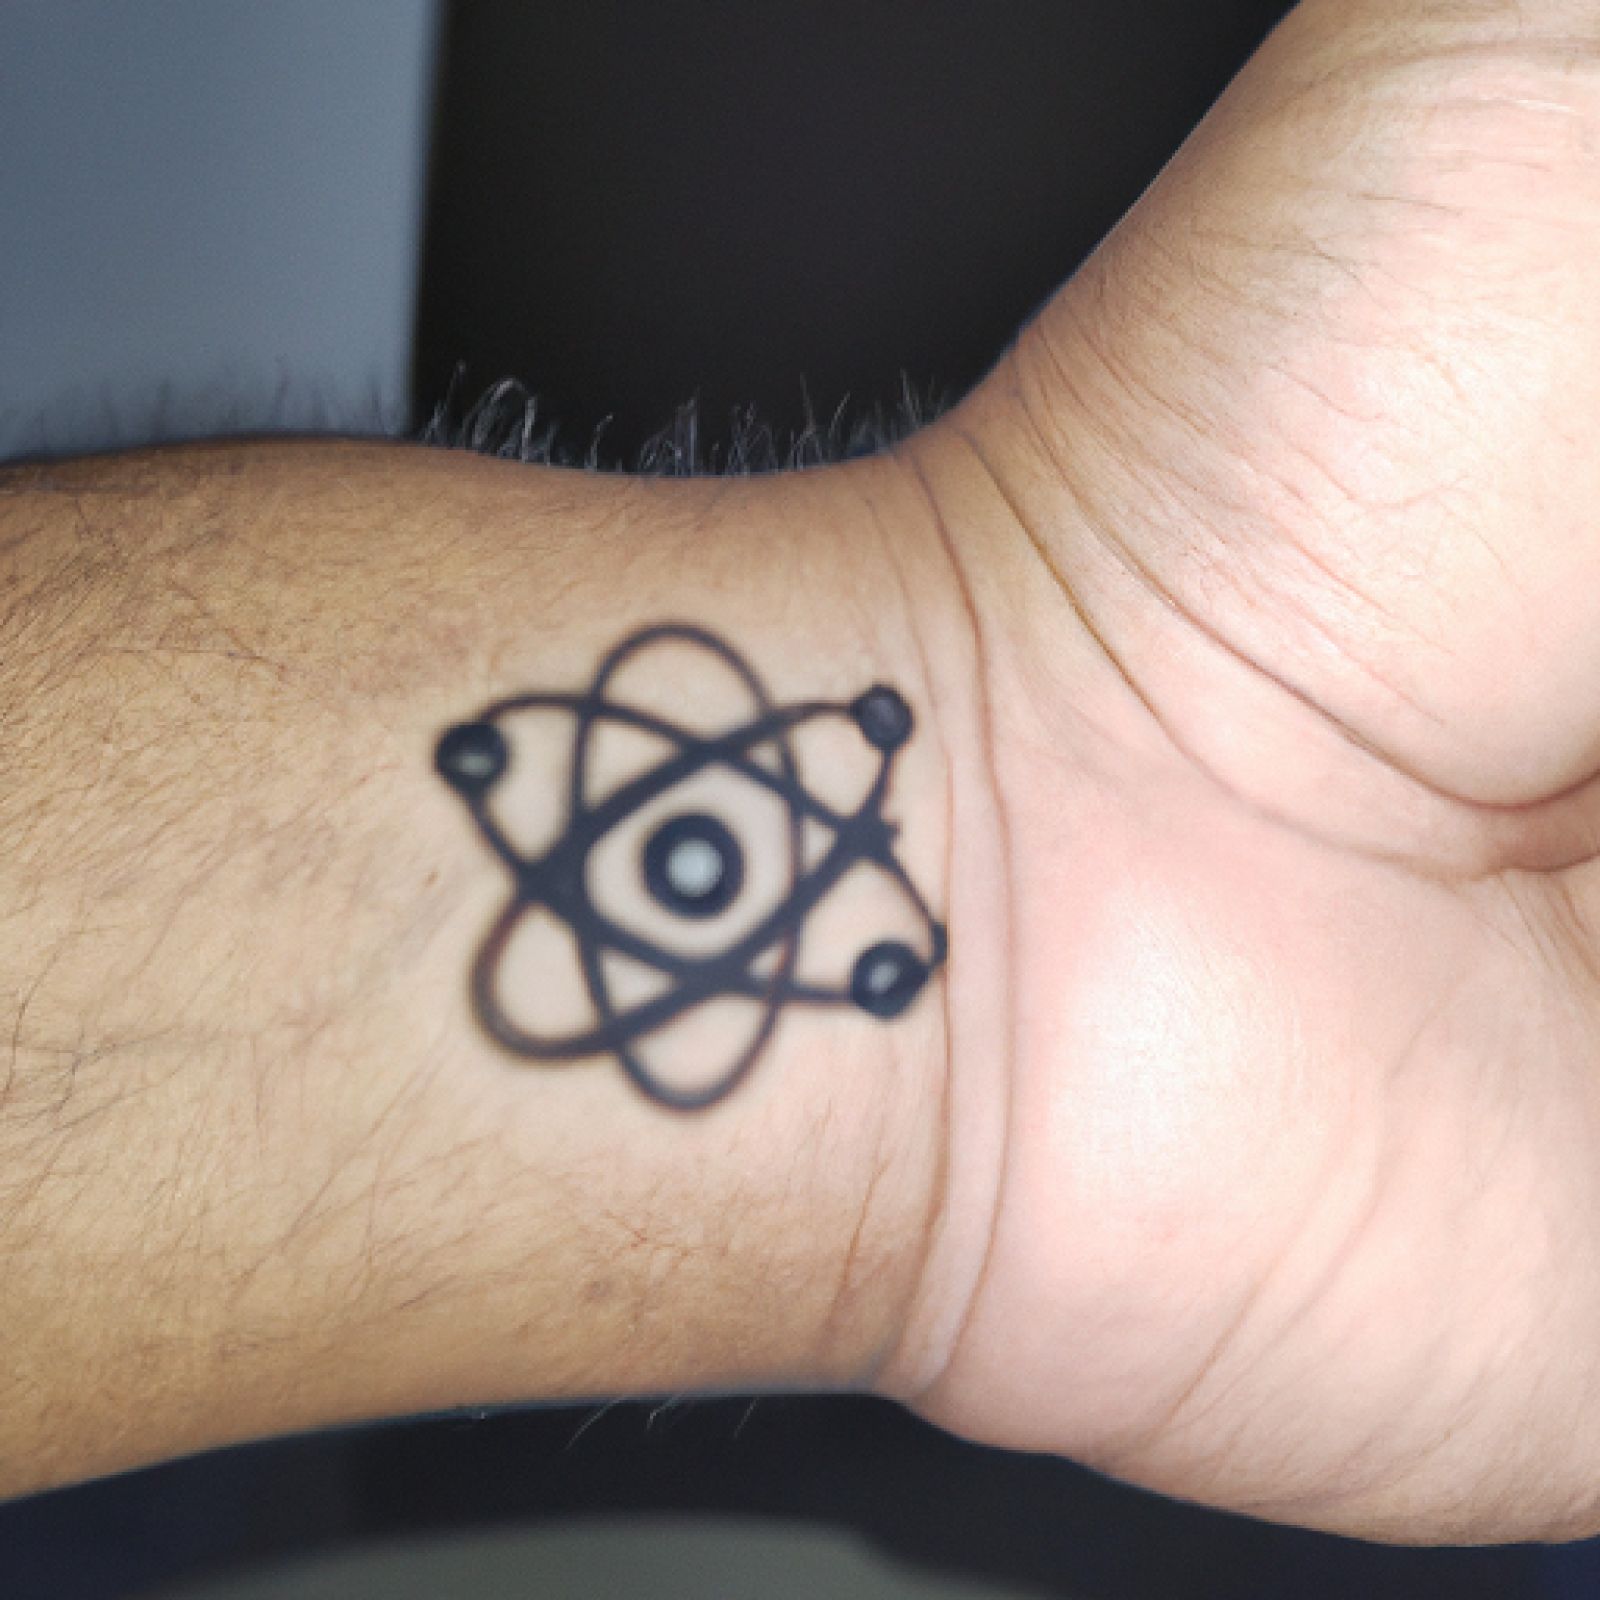 Atom tattoo on wrist for men